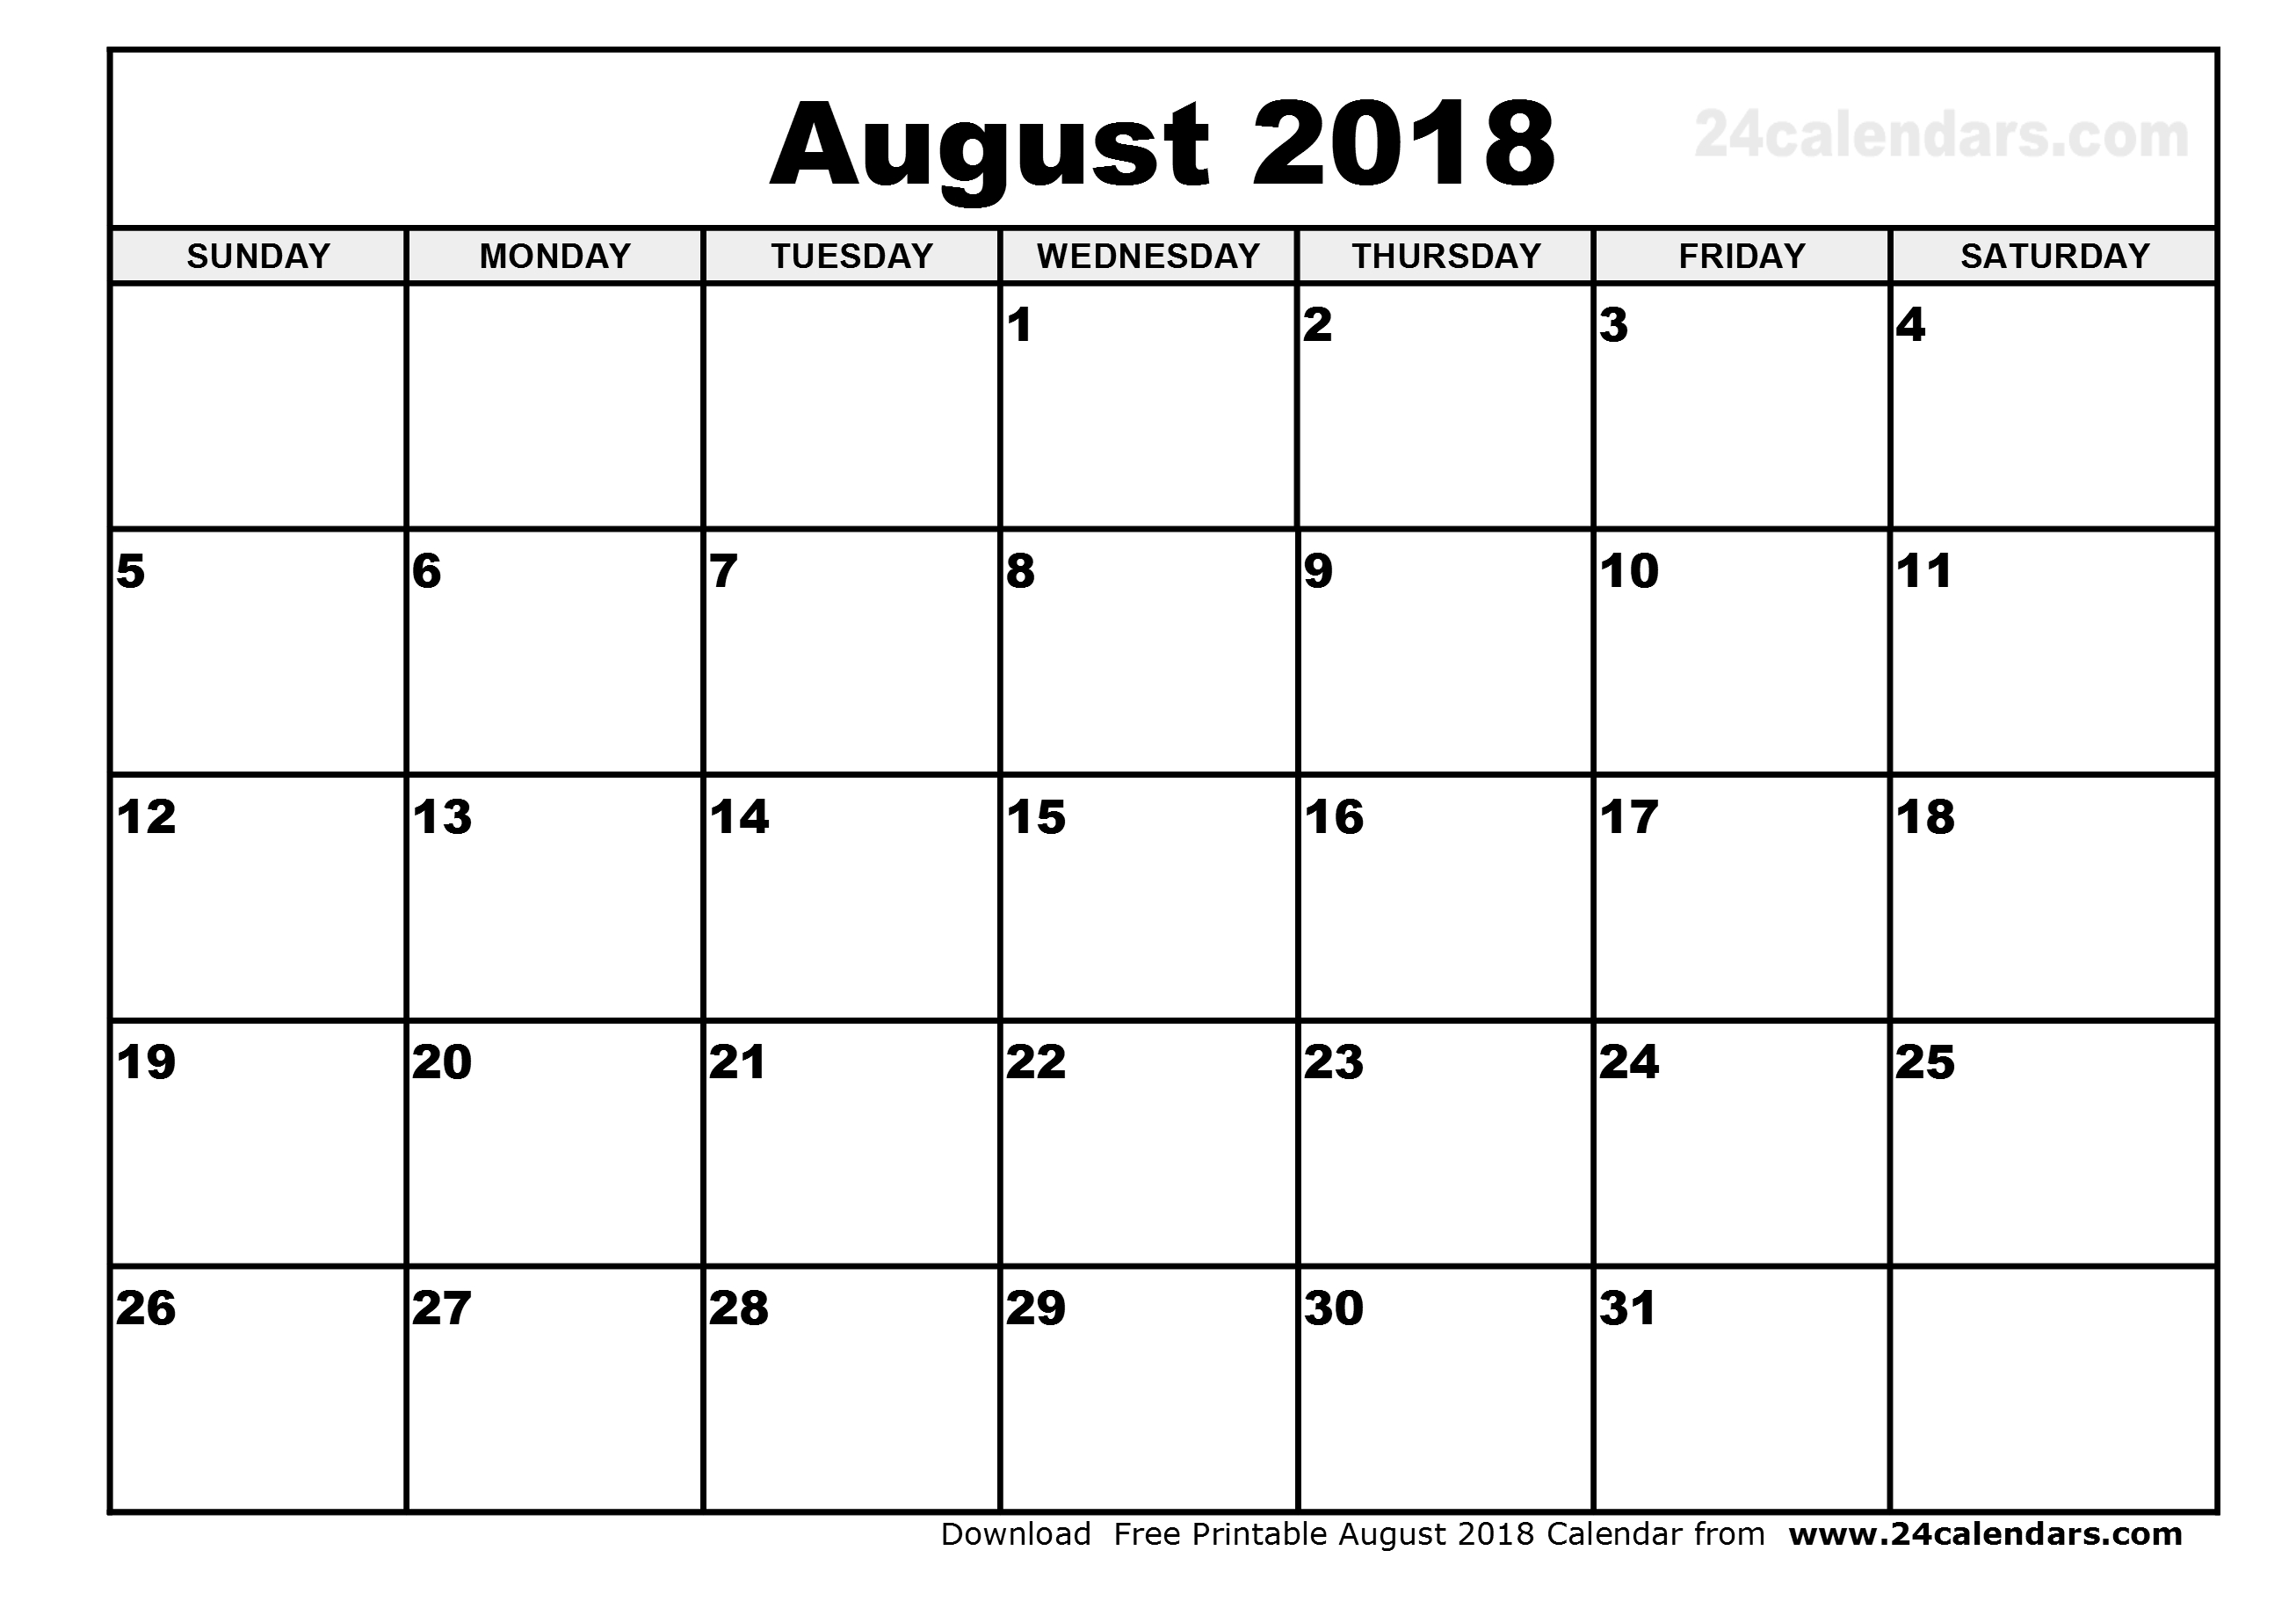 Free August 2018 calendar printable